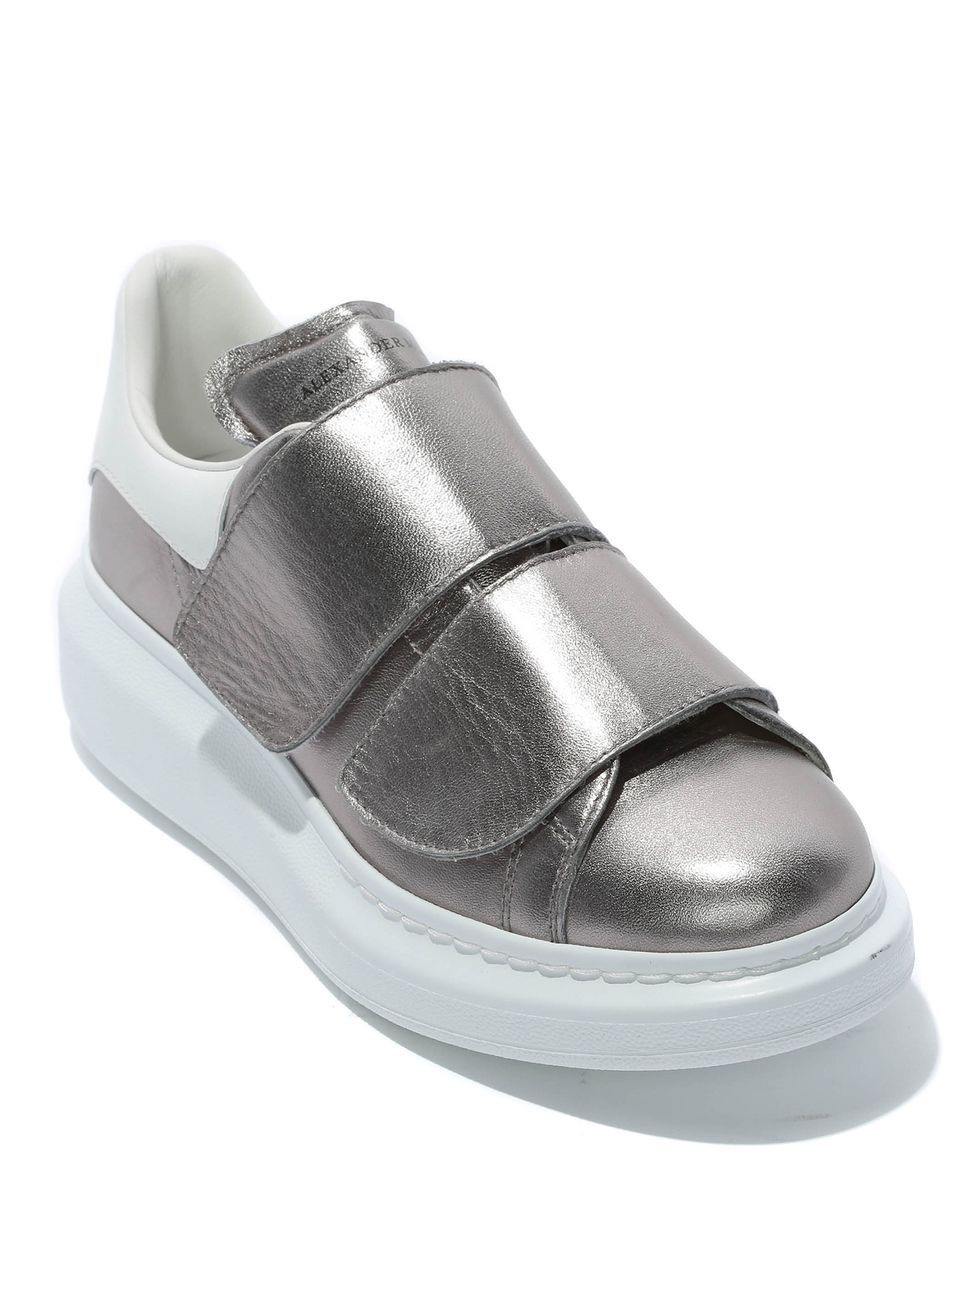 Footwear, Product, Shoe, White, Tan, Black, Grey, Beige, Silver, Leather, 